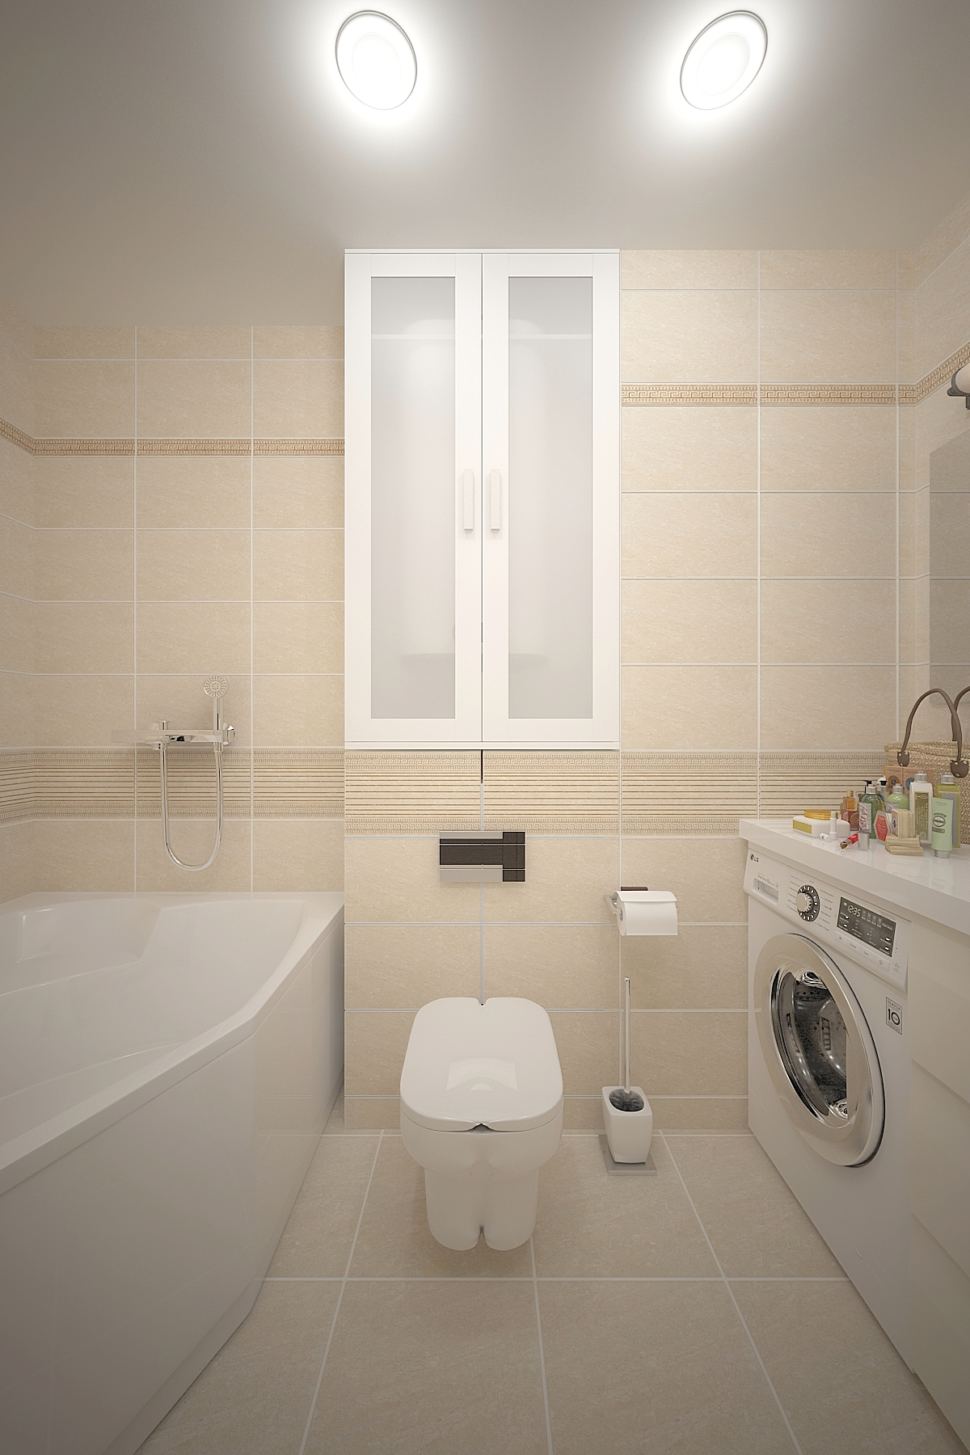 Визуализация ванной комнаты 3 кв.м в бежевых тонах, белый шкаф, стиральная машина, тумба, мойка, зеркало, унитаз, шкаф